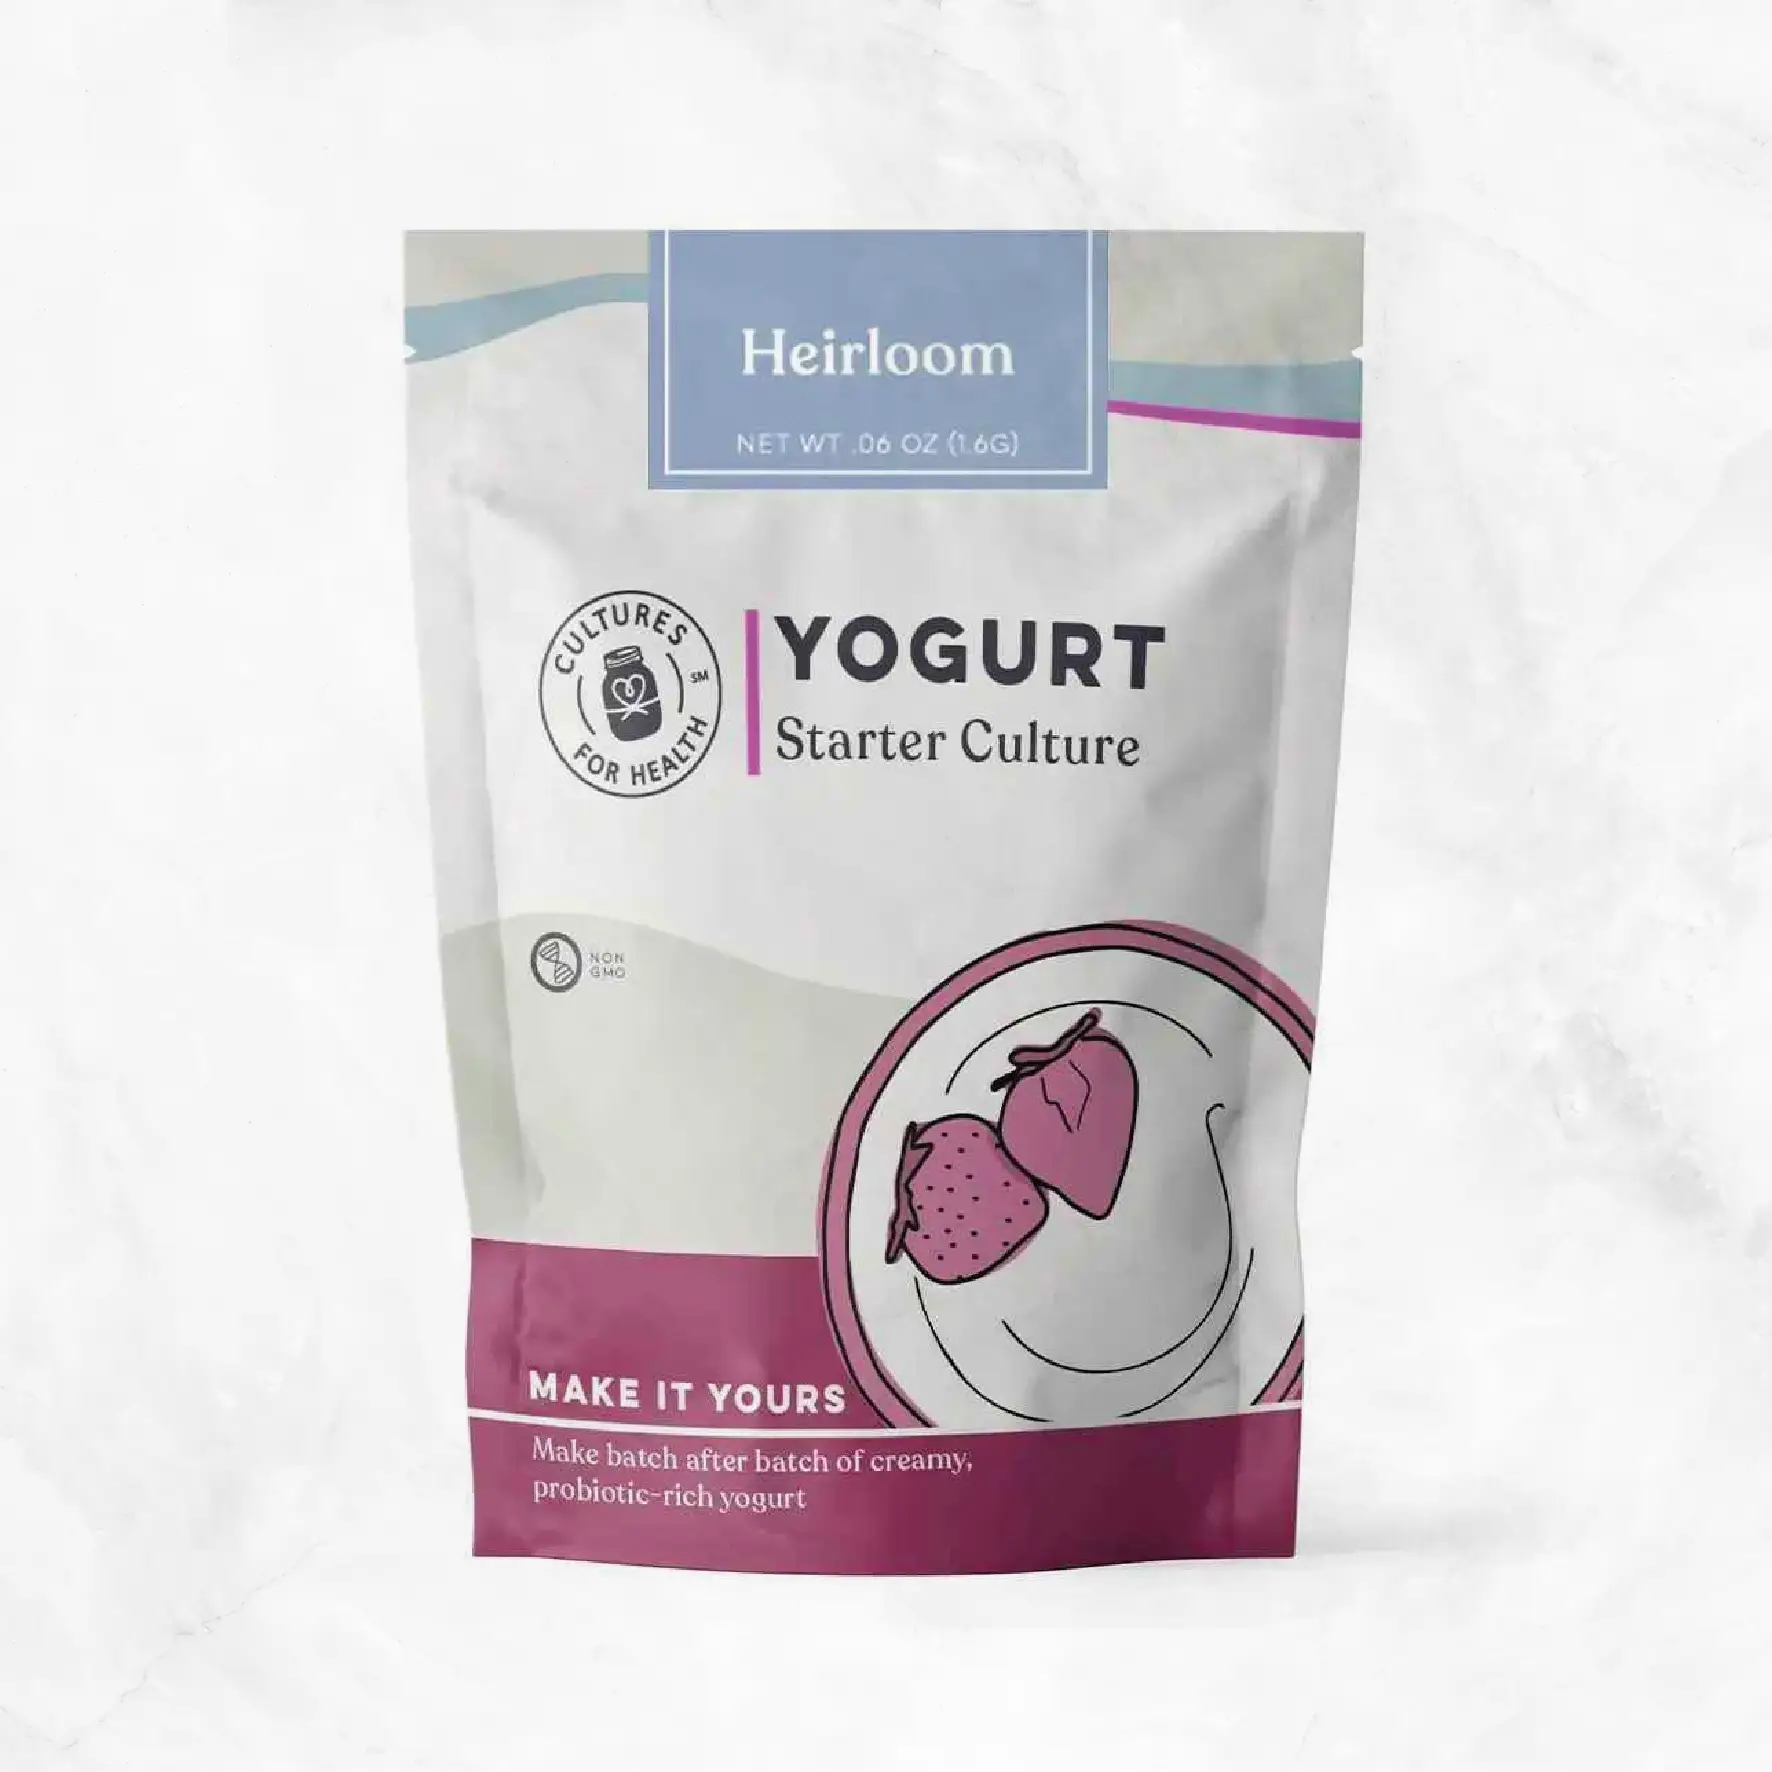 Heirloom Yogurt Starter Cultures Delivery